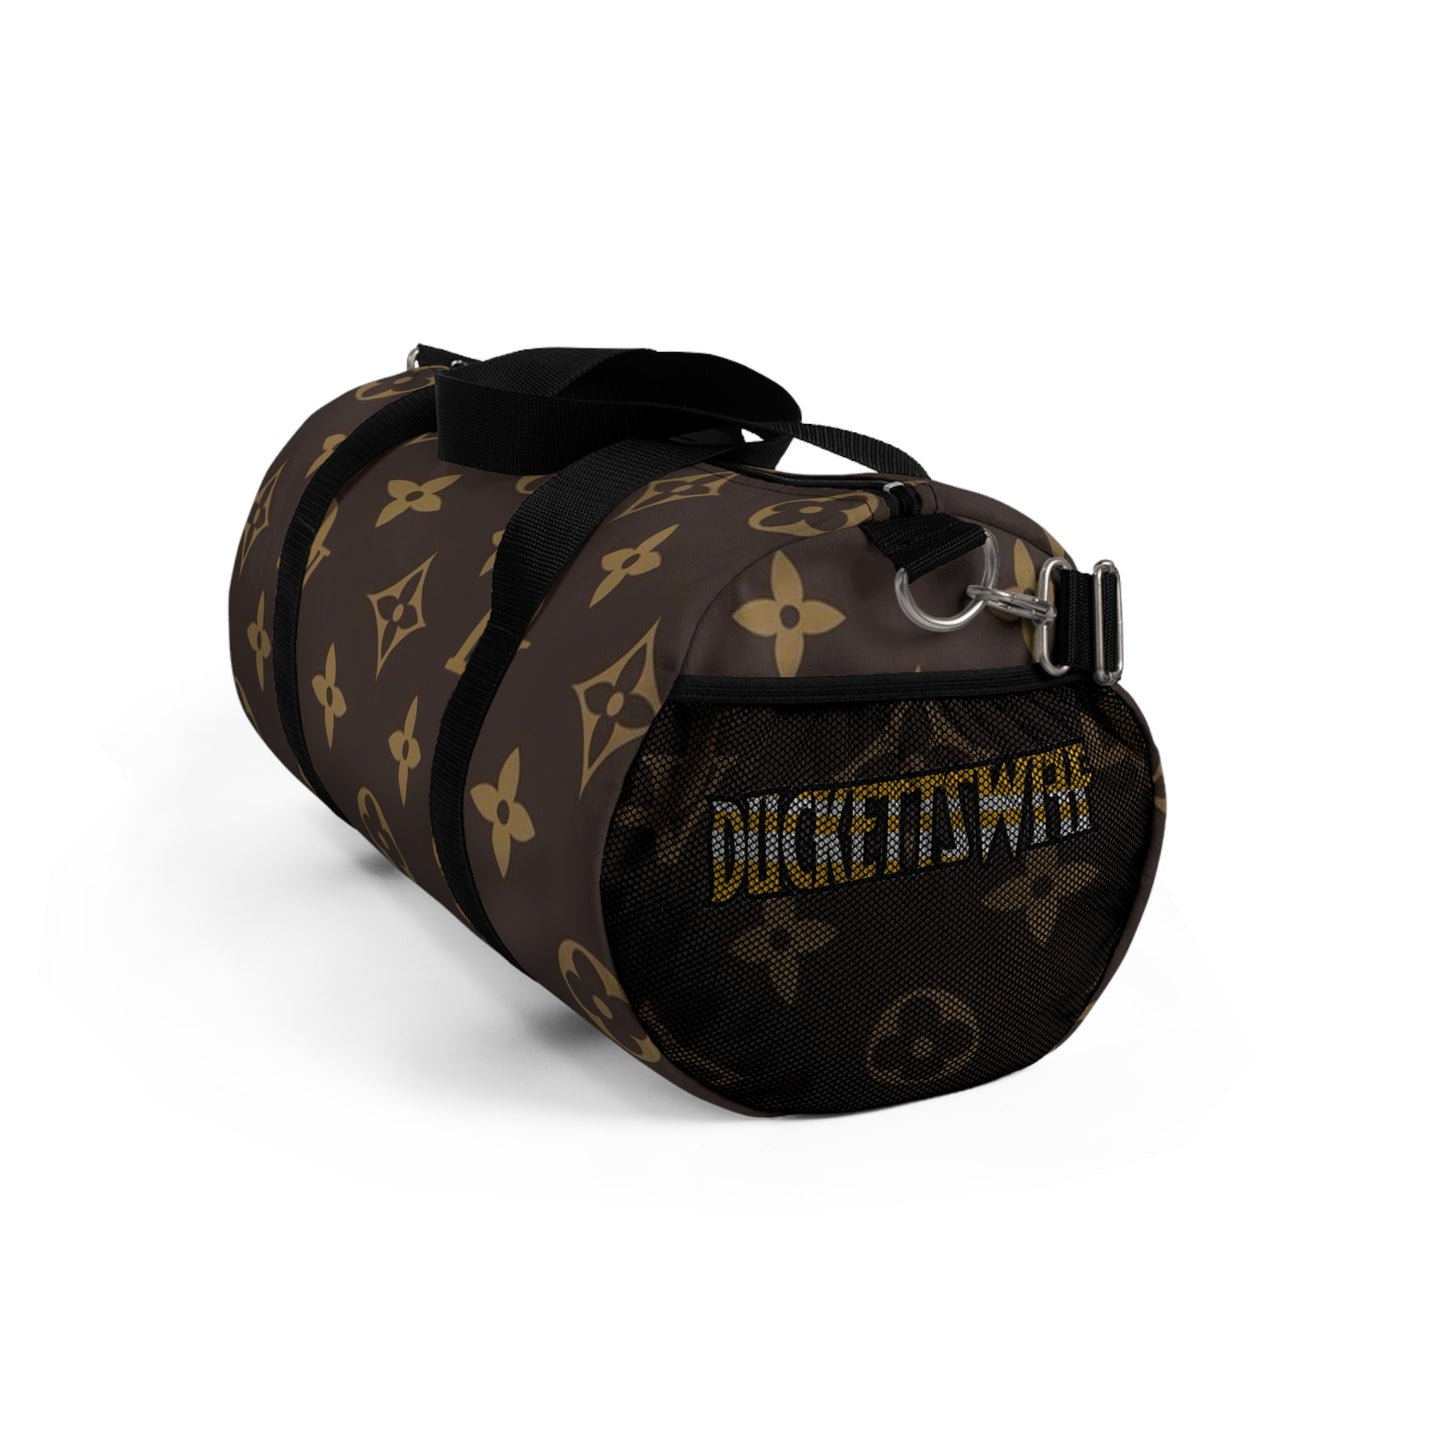 DuckettVuitton Brünette Duffel Bag